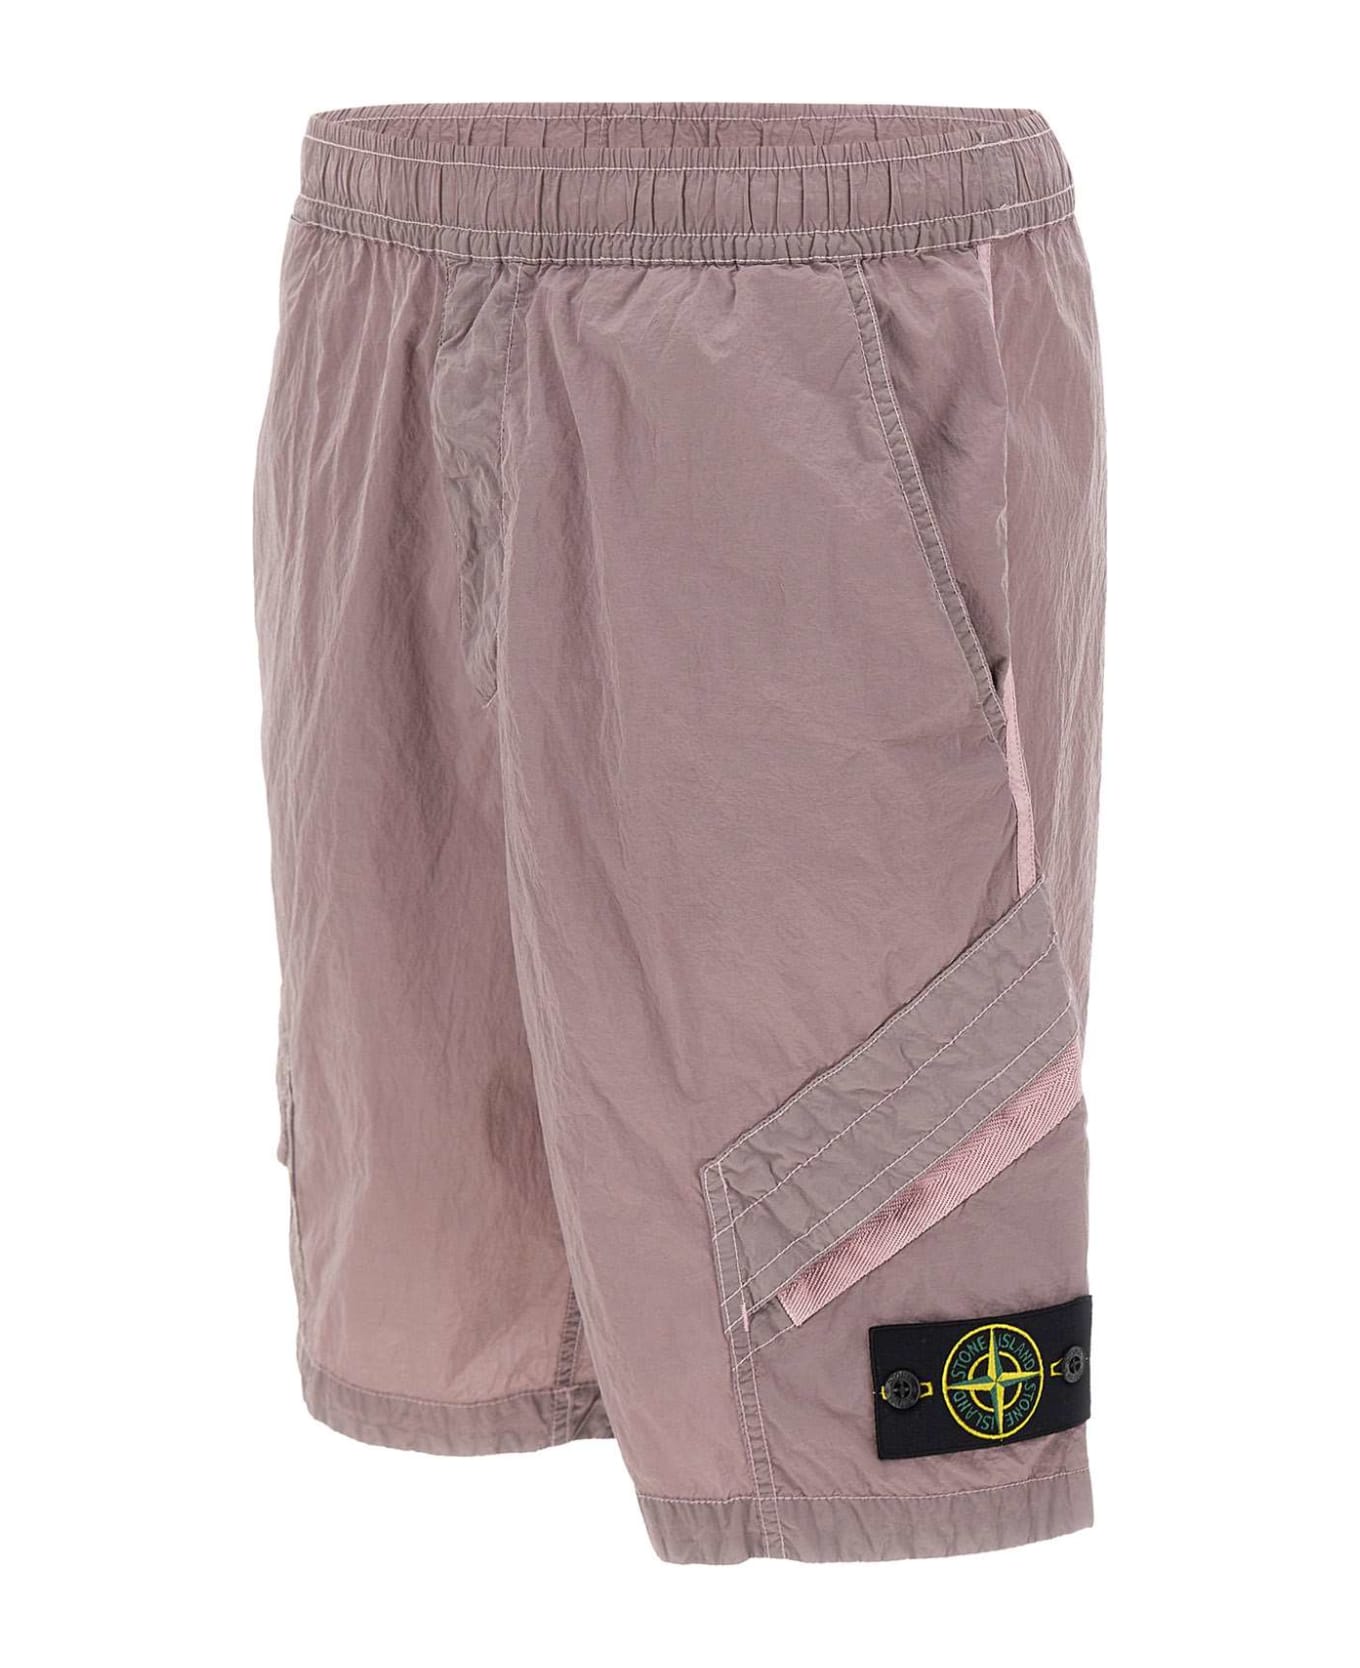 Stone Island Iridescent Nylon Shorts - PINK